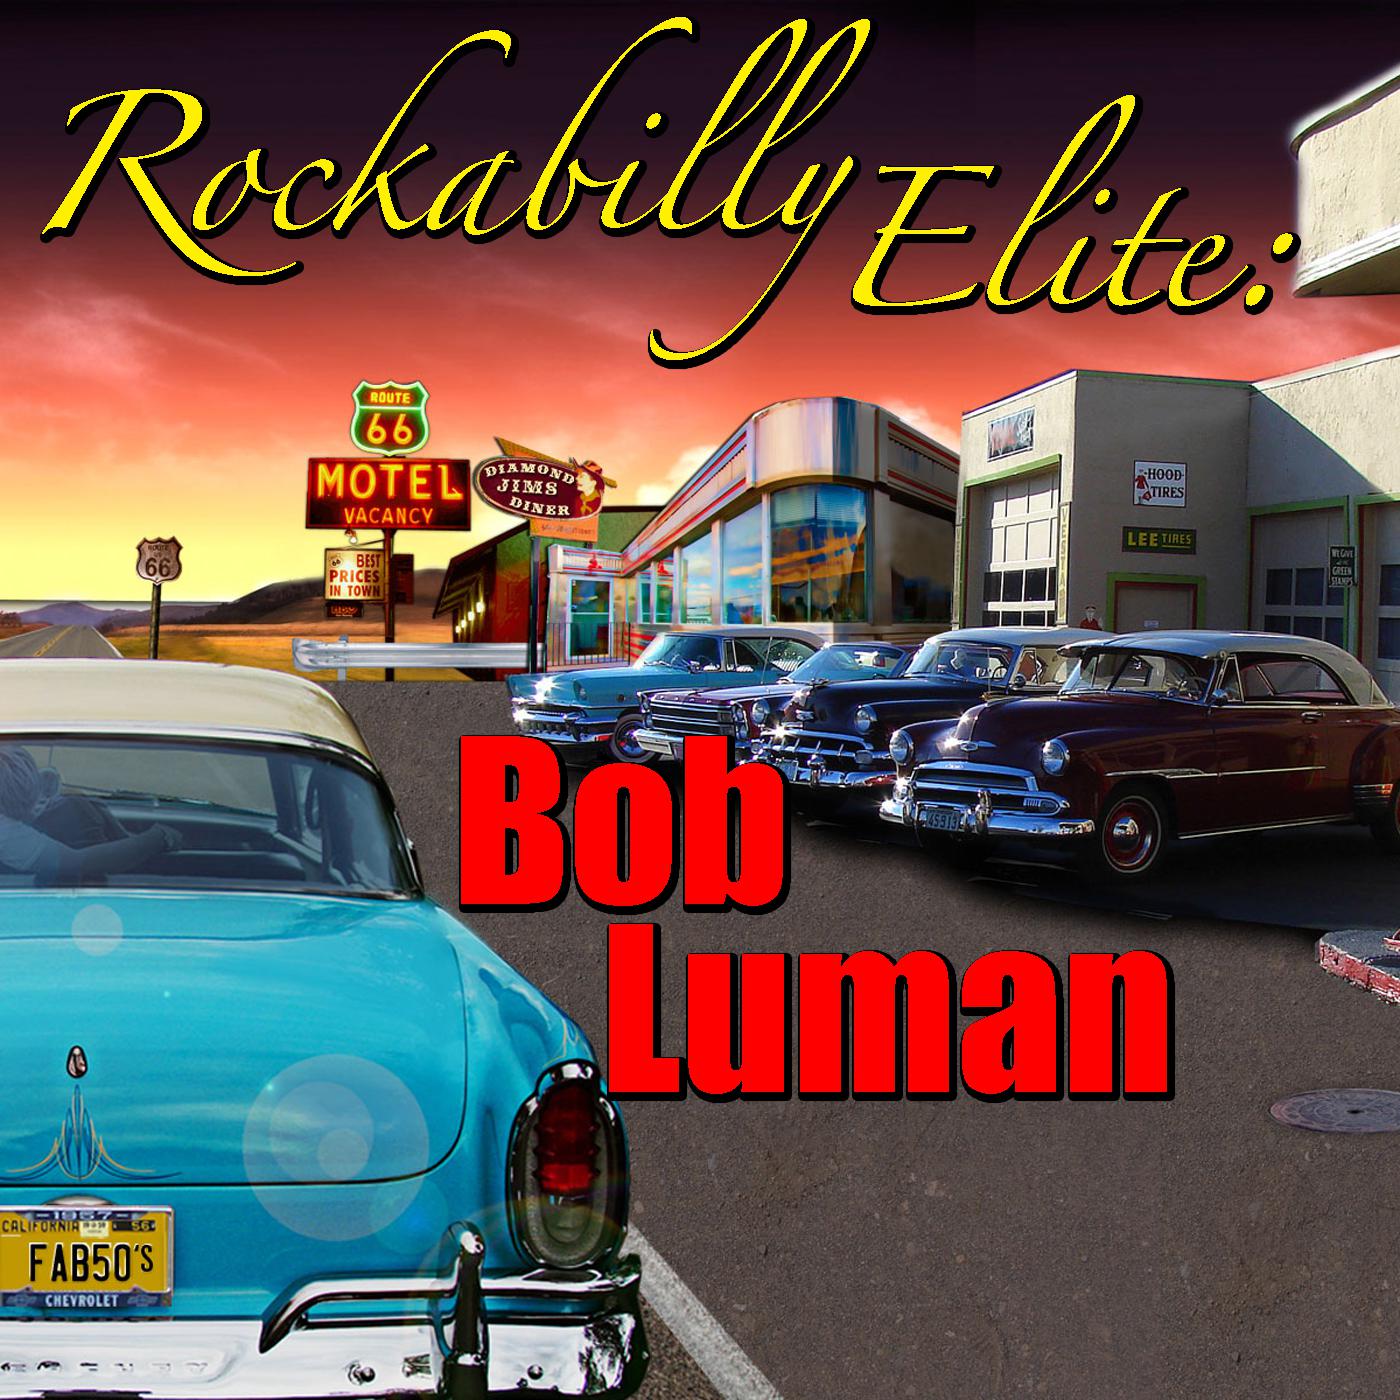 Rockabilly Elite: Bob Luman